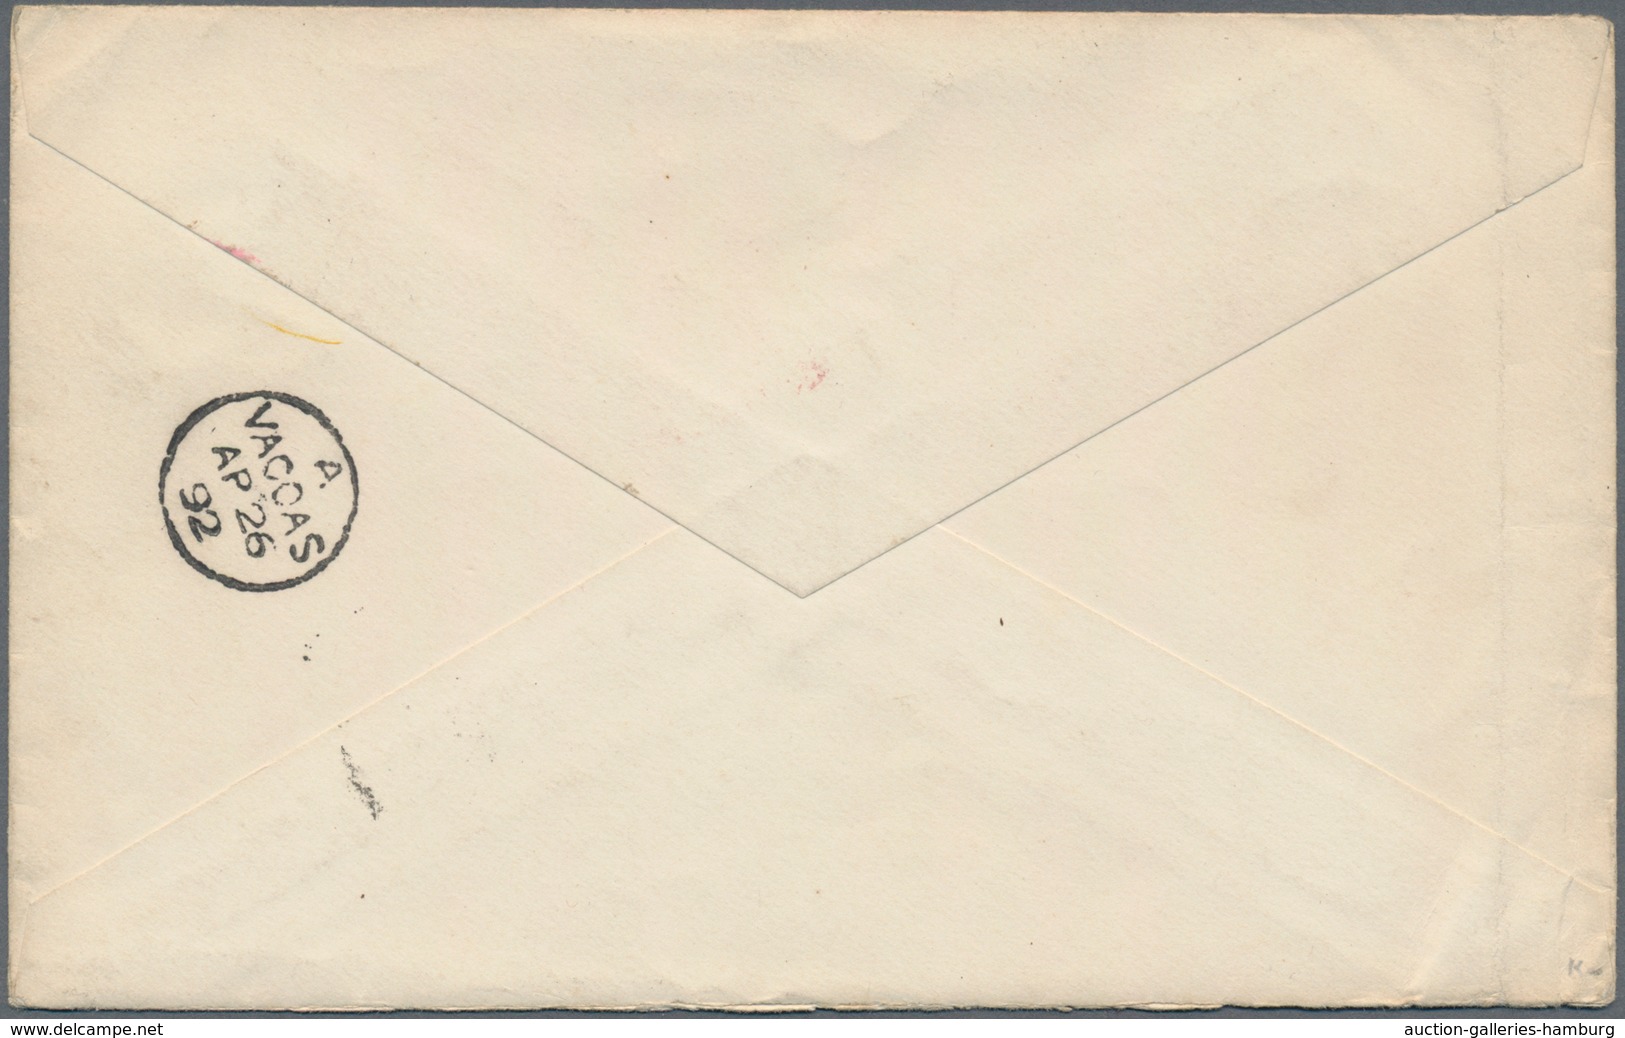 Mauritius: 1892. 50c Yellow Postal Stationery Envelope, Cancelled Mauritius A AP 26 92 And Oval Regi - Mauricio (...-1967)